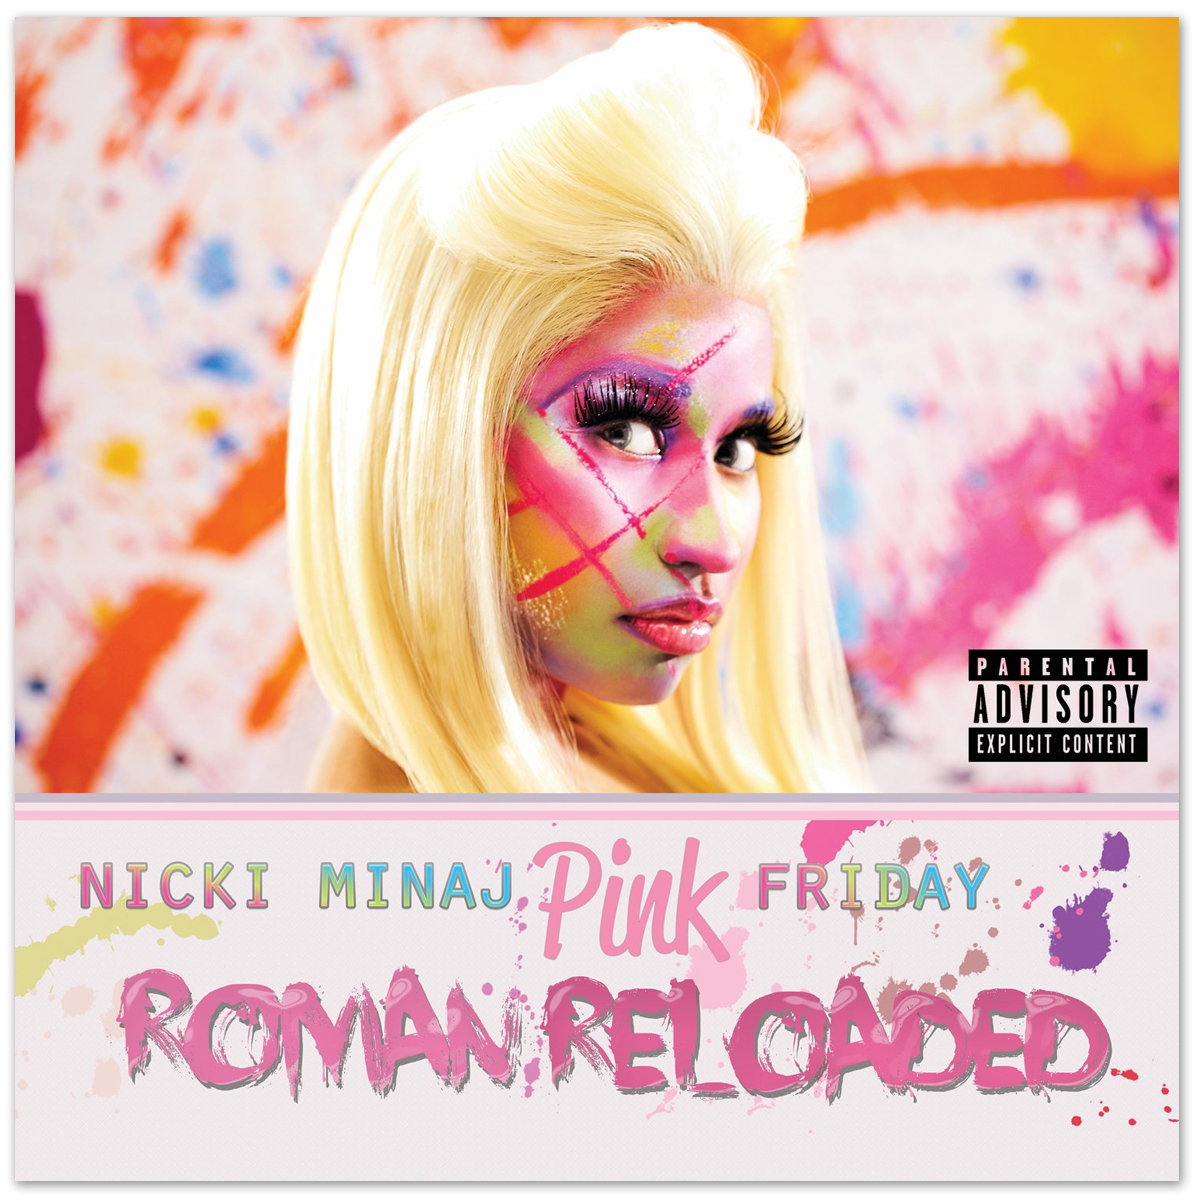 Nicki Minaj Pink Friday Roman Reloaded By Musicalpotter On Deviantart